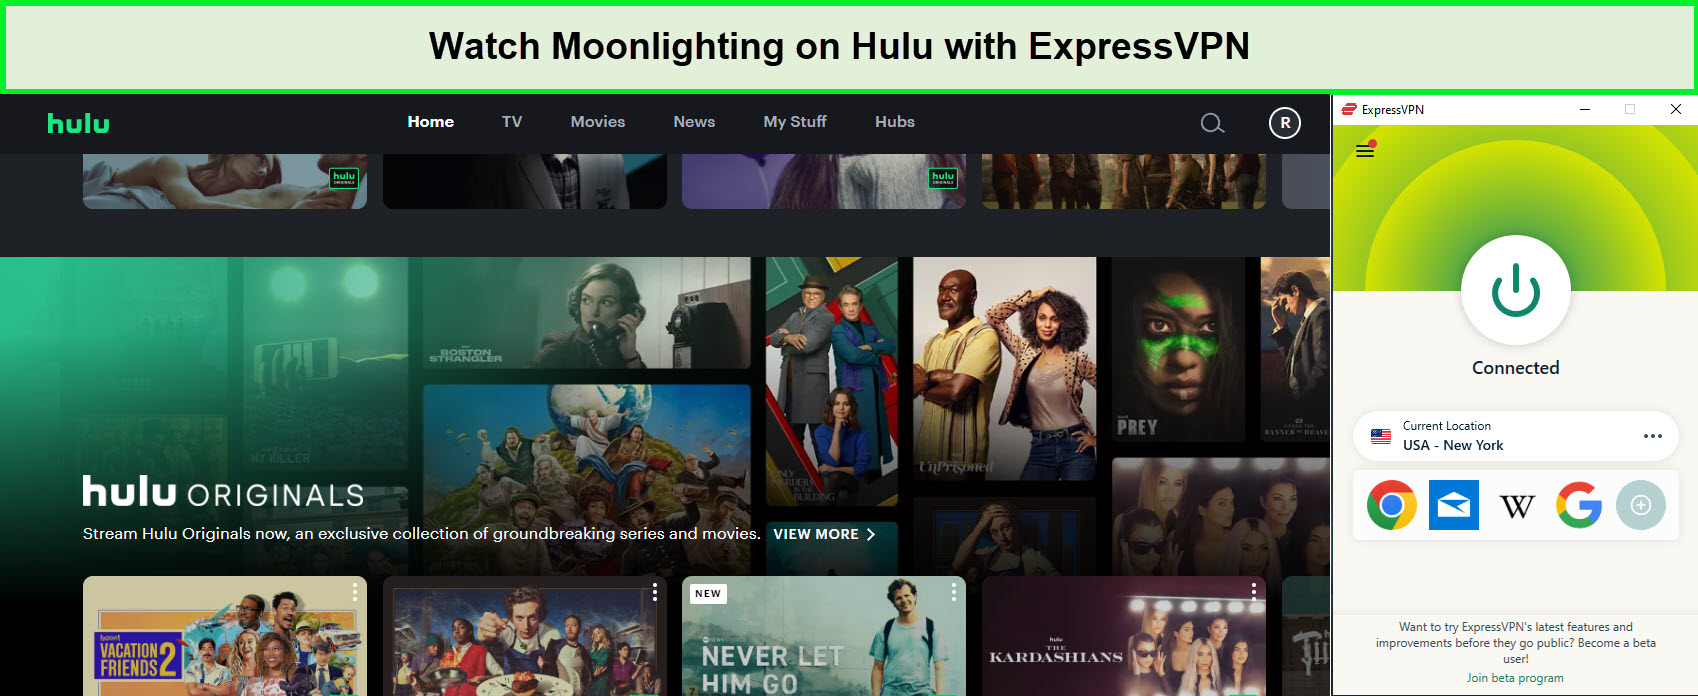 Watch-Moonlighting-in-Spain-on-Hulu-with-ExpressVPN